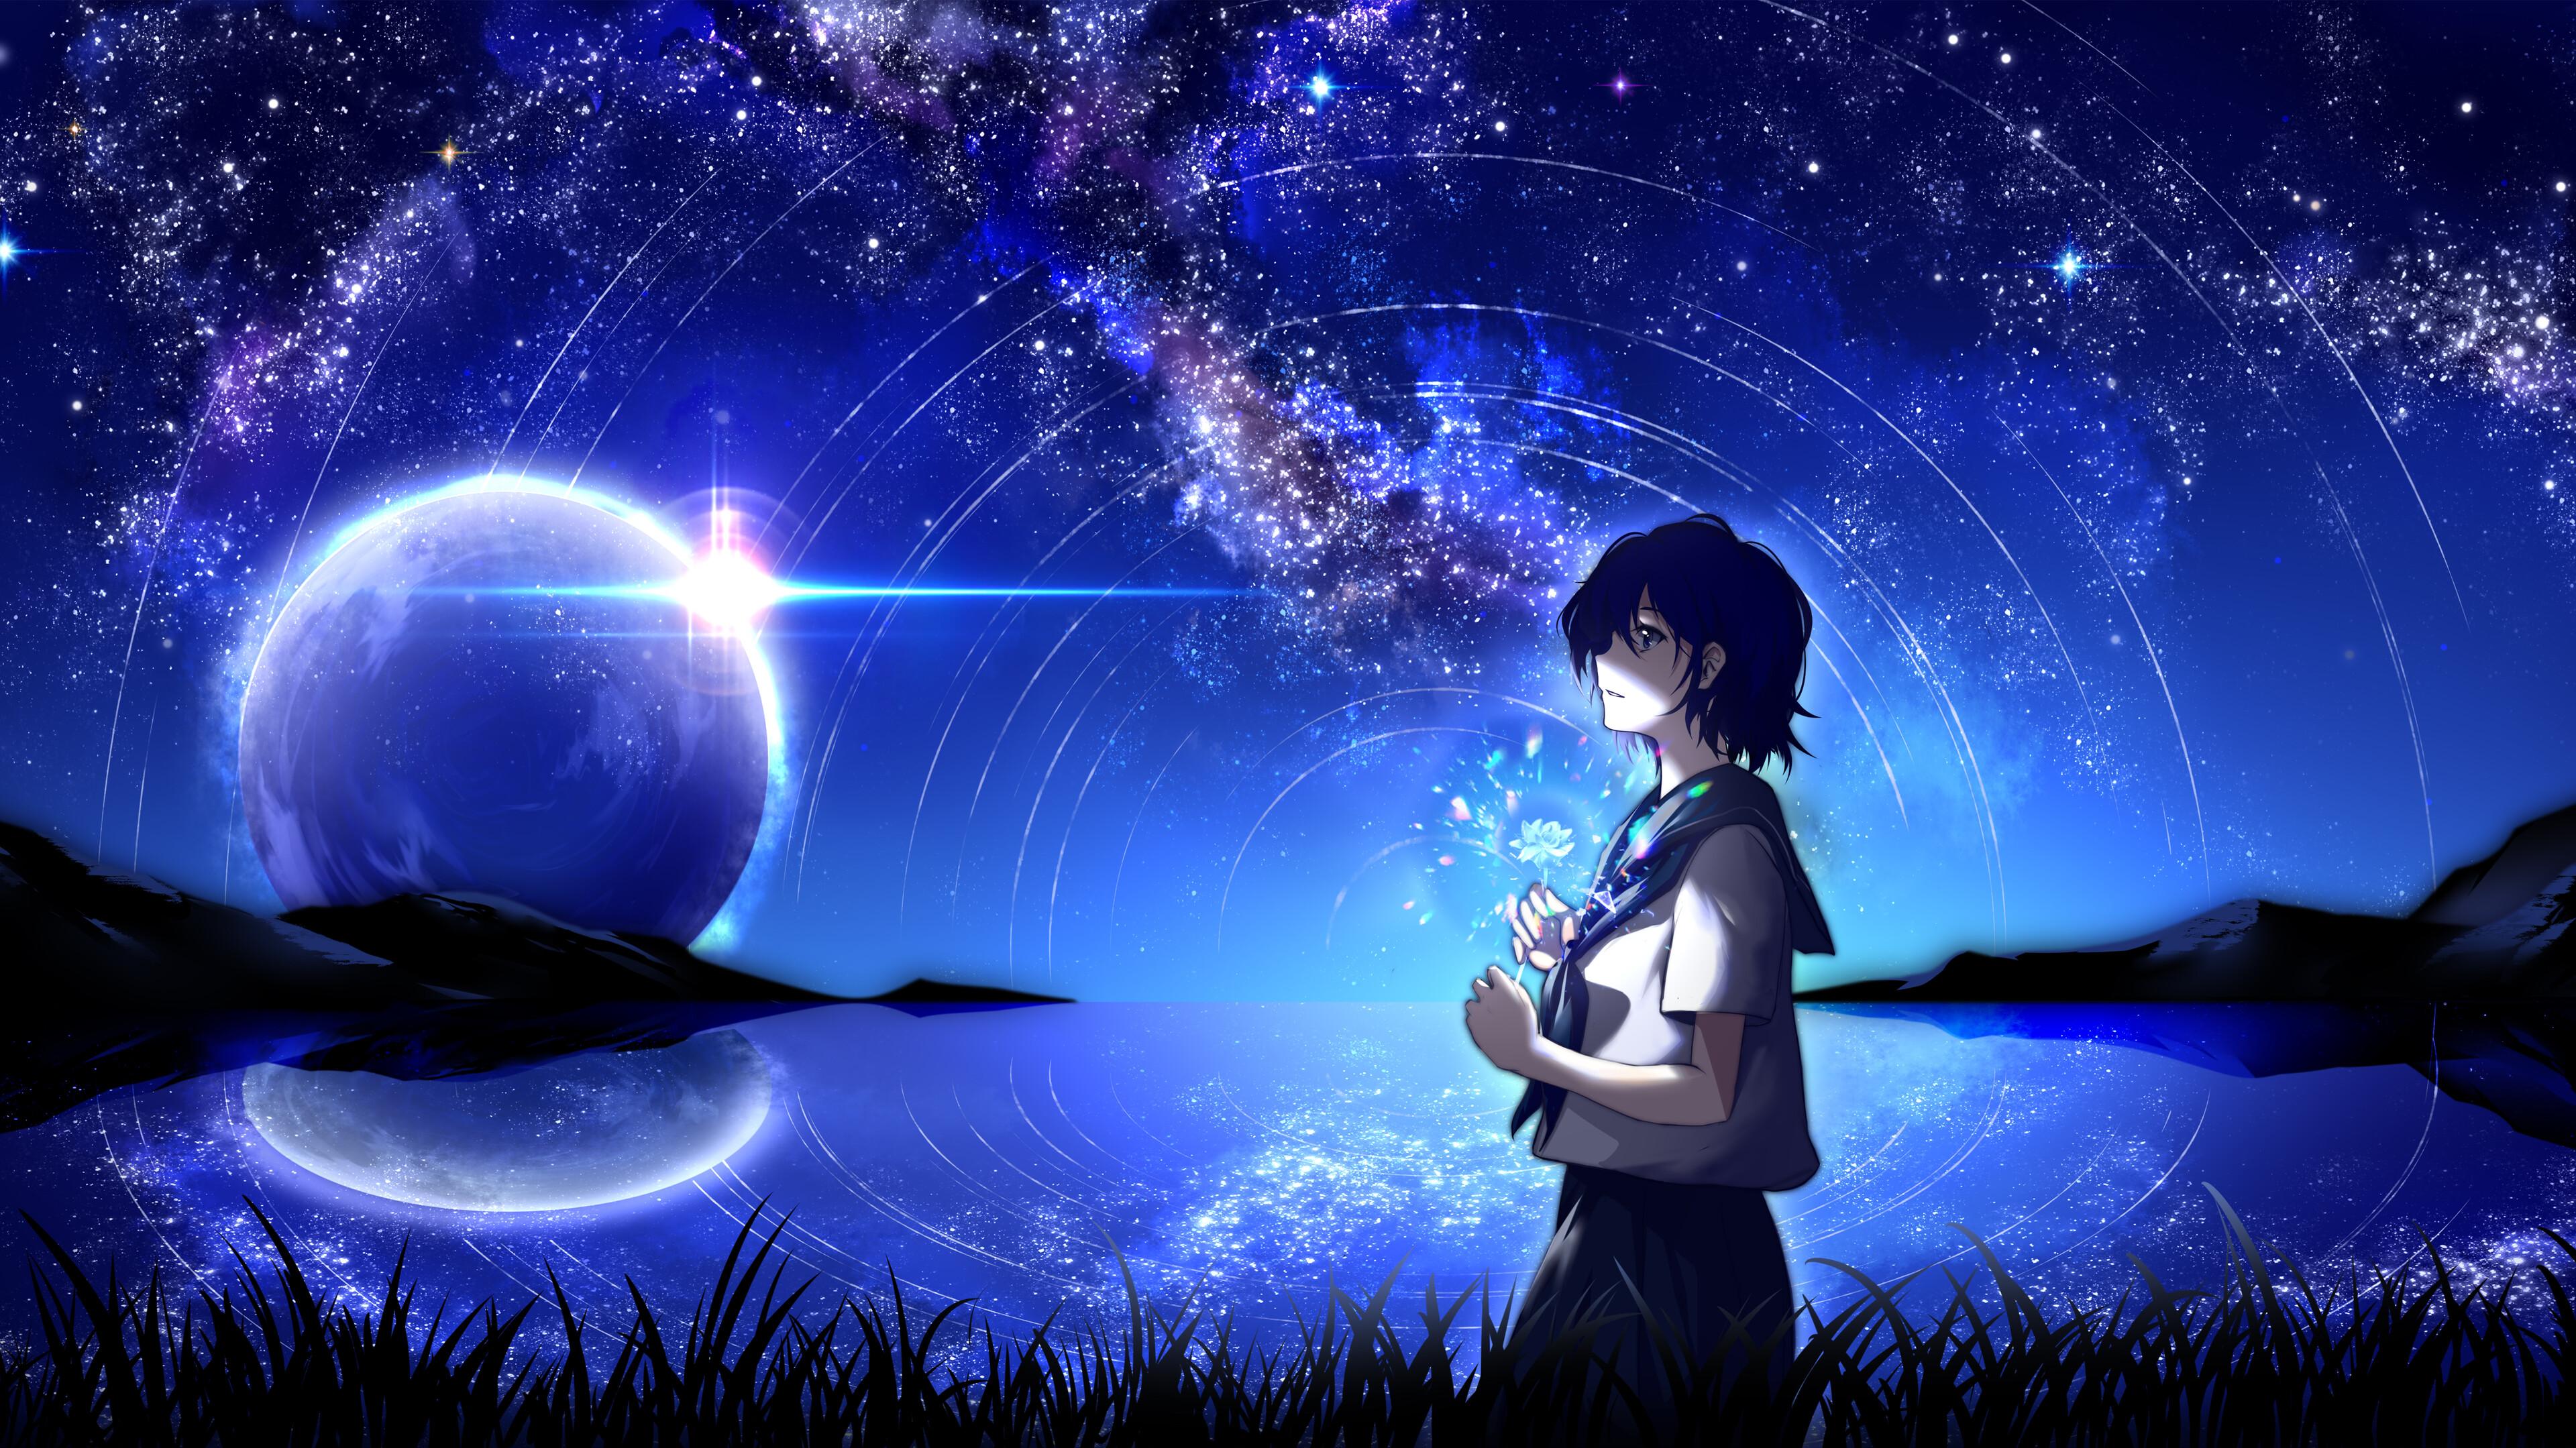 4K Anime School Girl Night Moon Lake Scenery Wallpaper 2800g